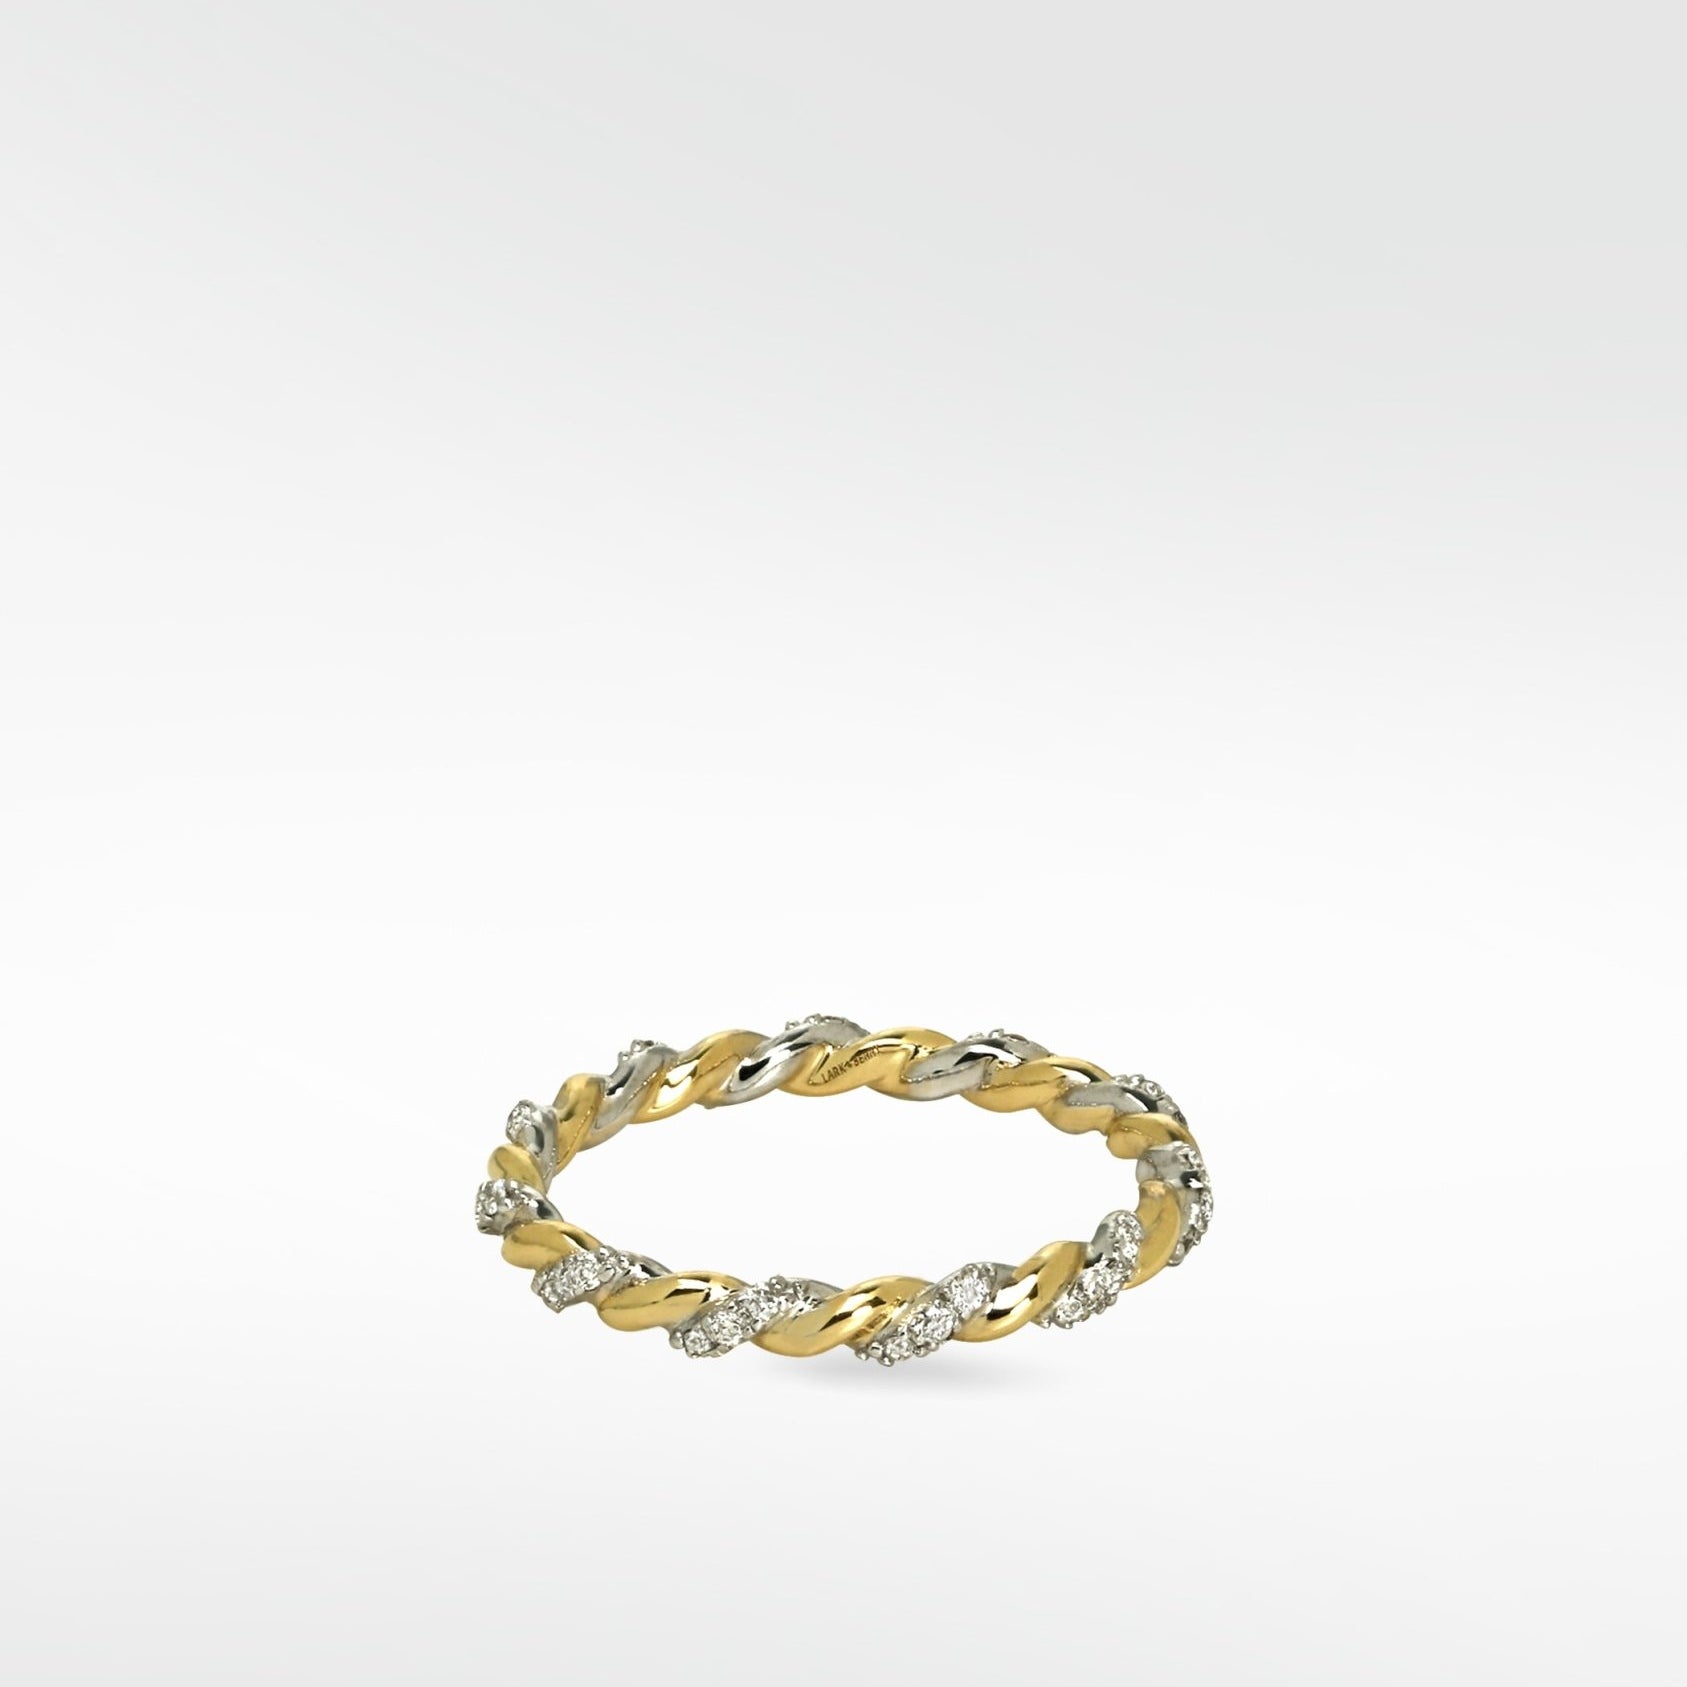 Modernist Slim Twist Diamond Ring in 14k Gold - Lark and Berry